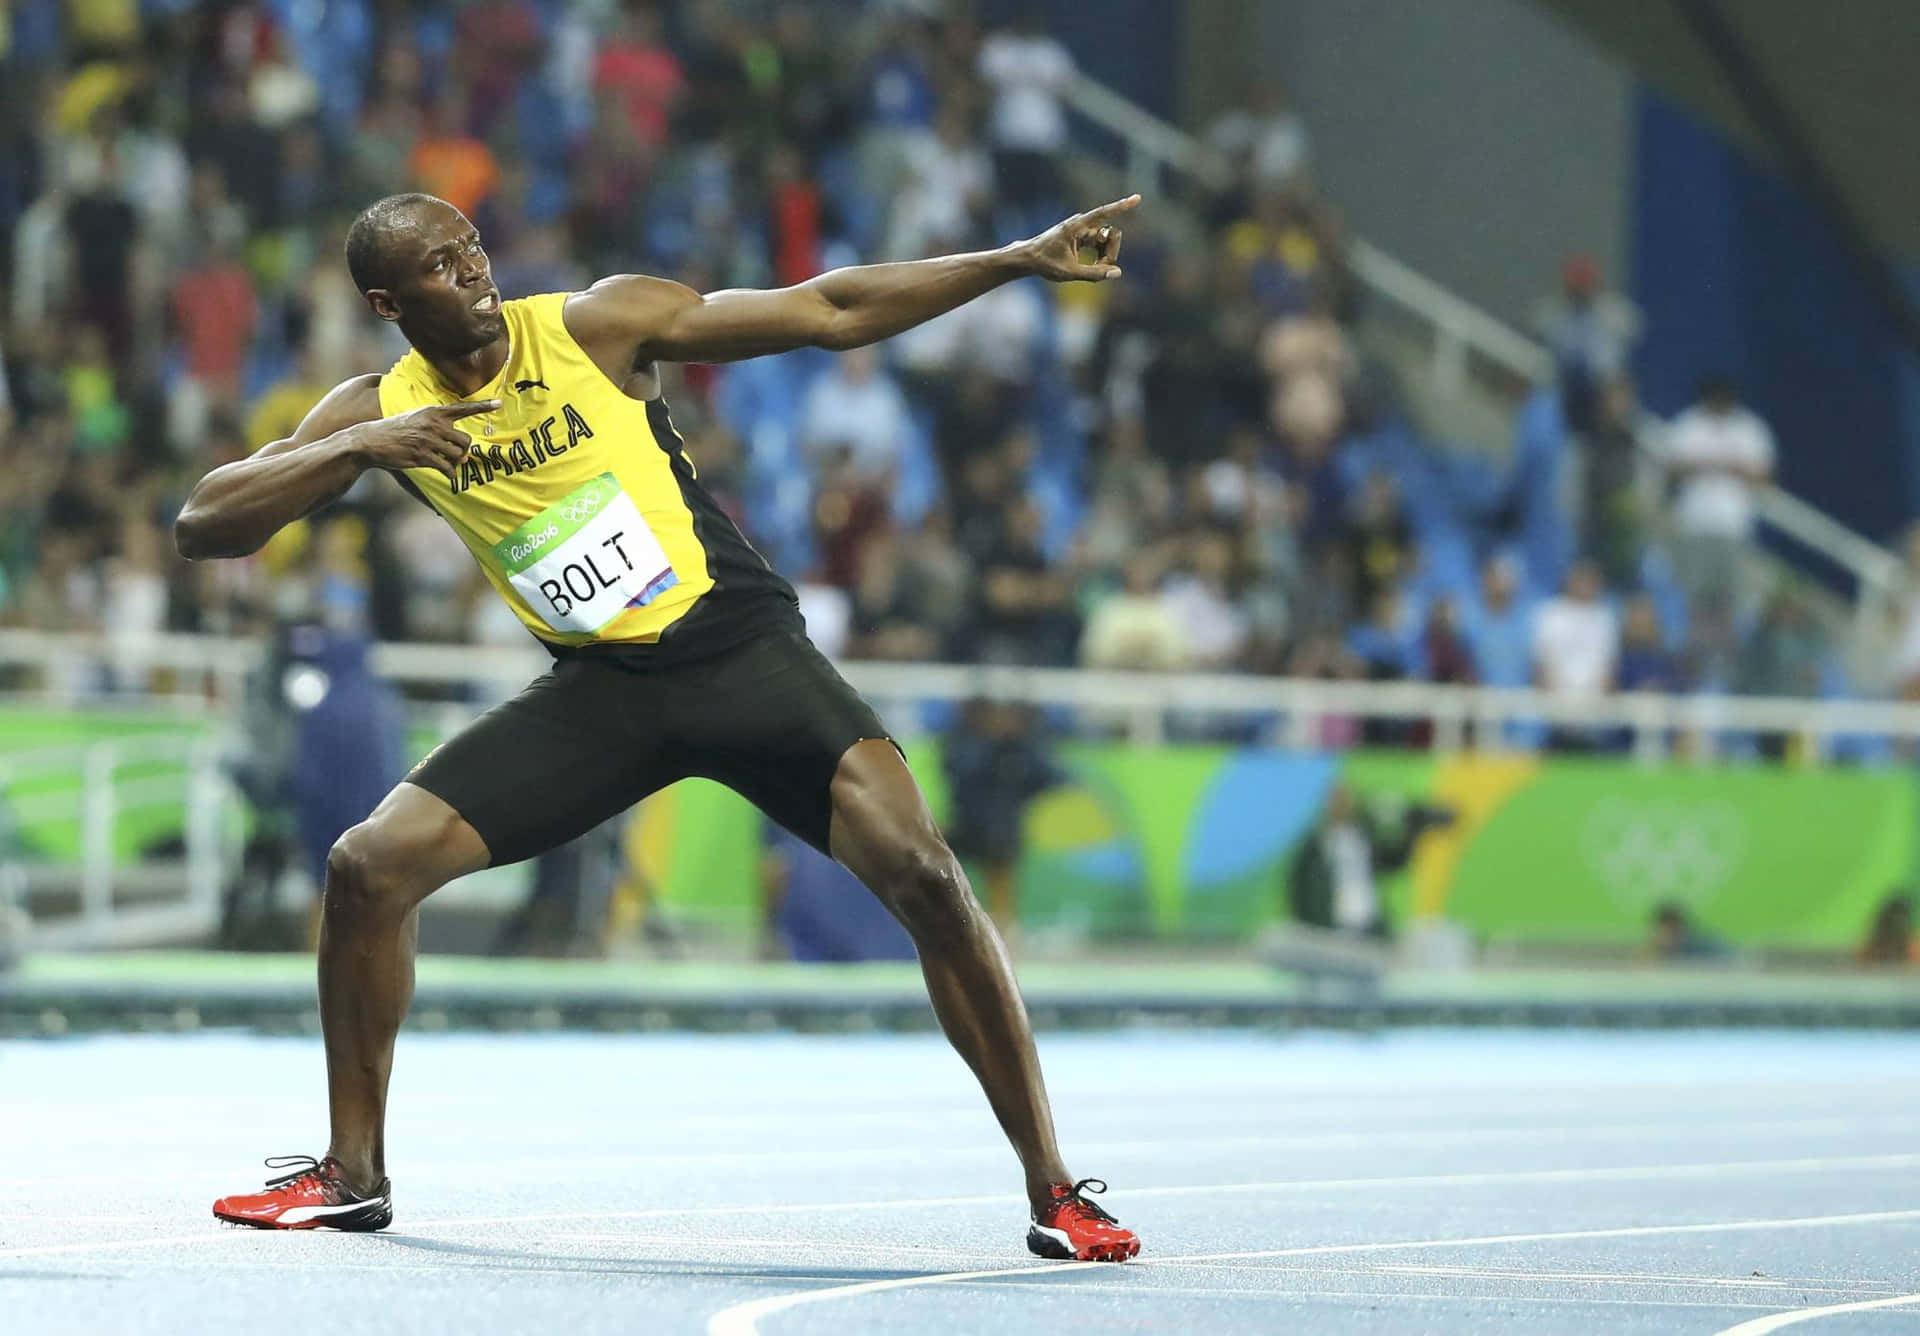 Usain Bolt Victory Pose Trademark News | Hypebeast